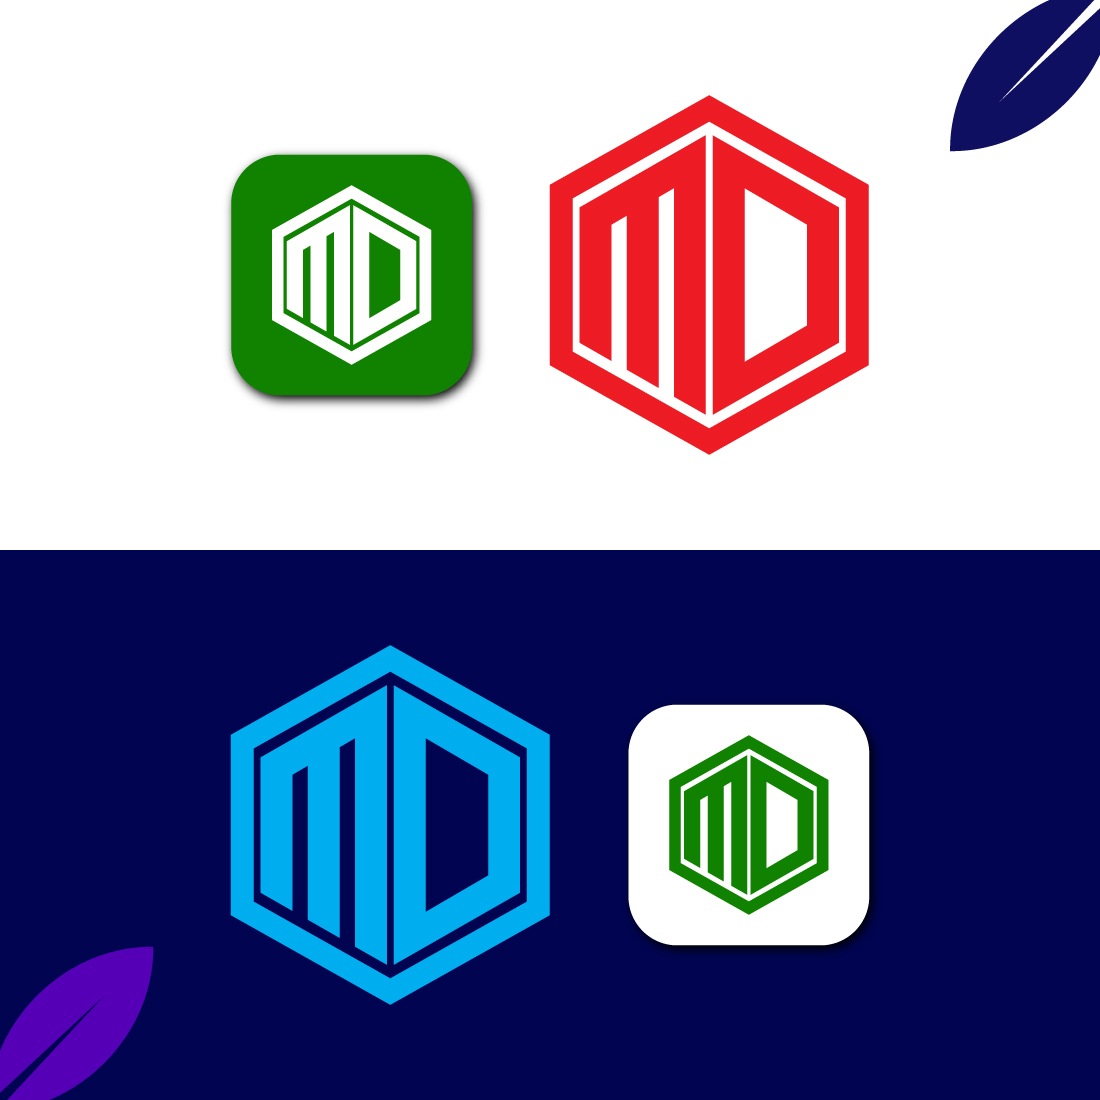 MD Logo Design preview image.